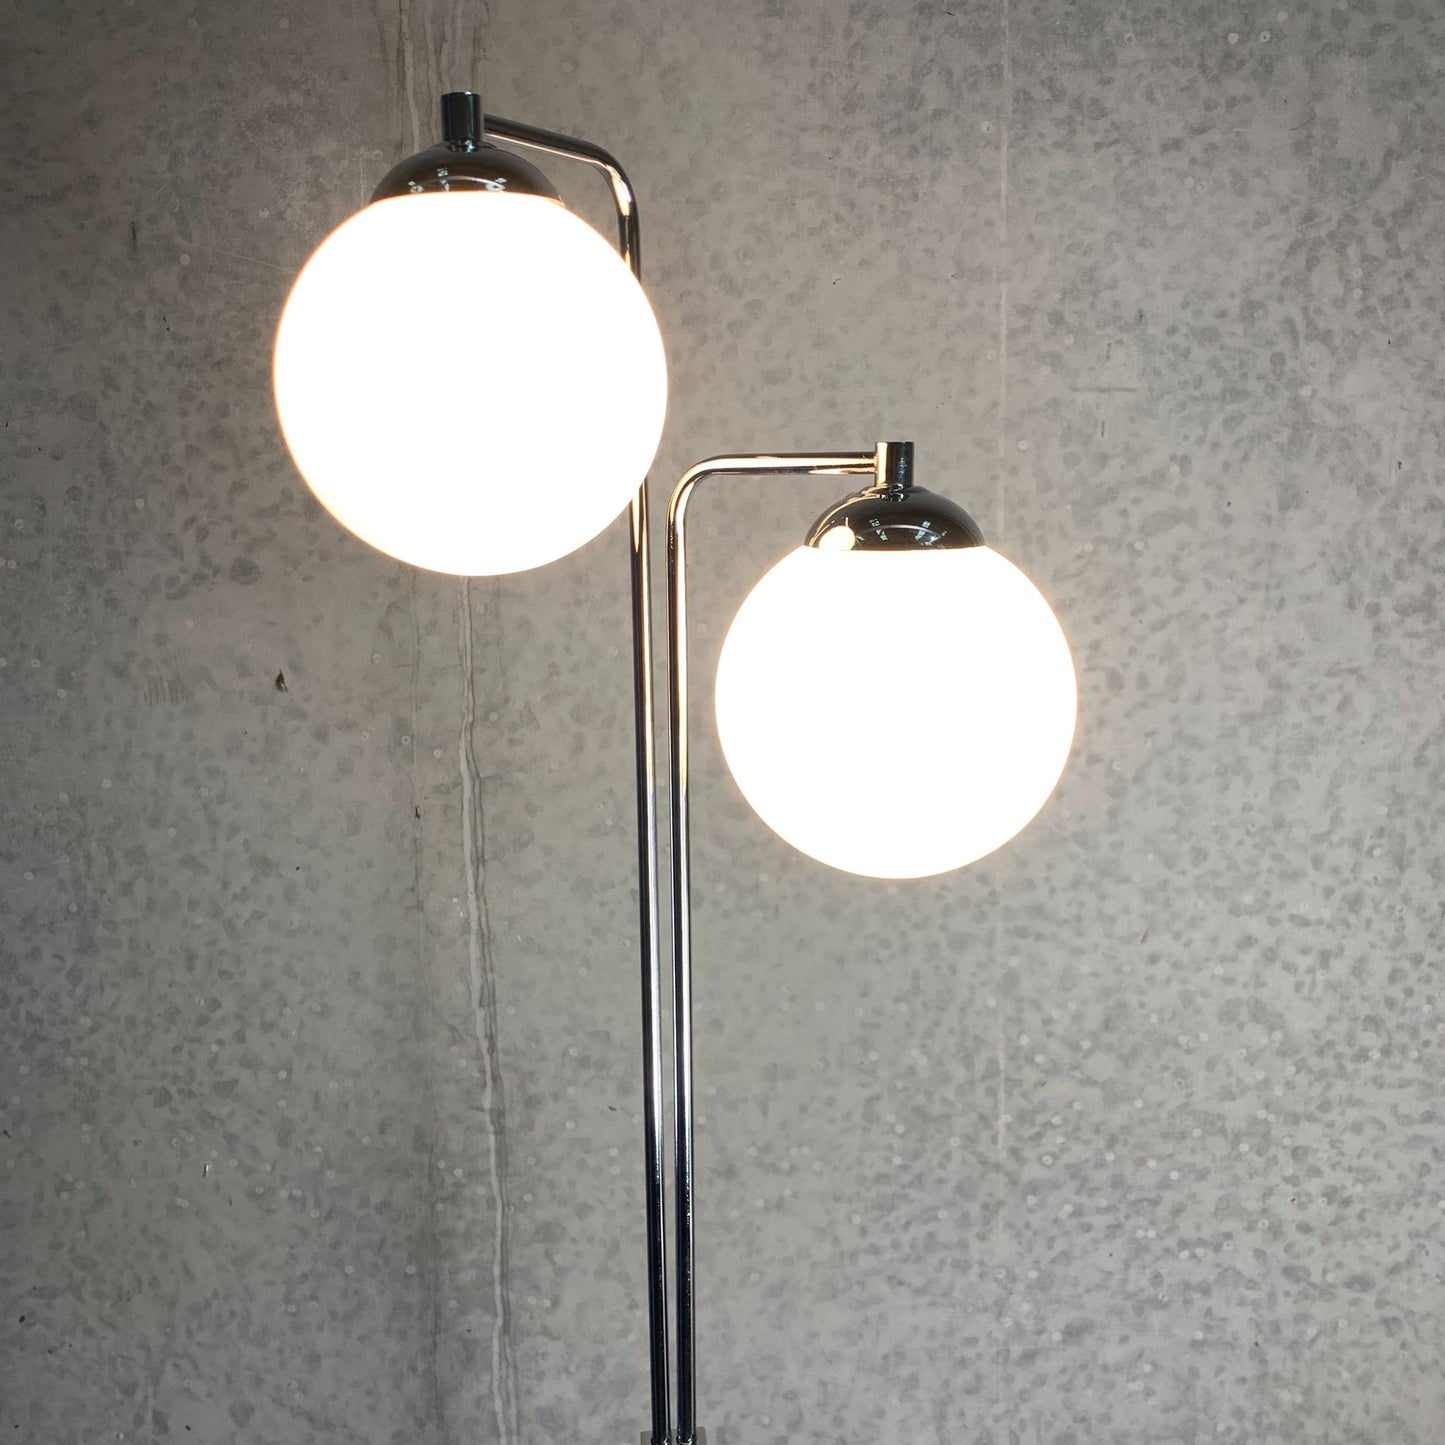 ORBIT 2 LIGHT FLOOR LAMP *NEW ARRIVAL*